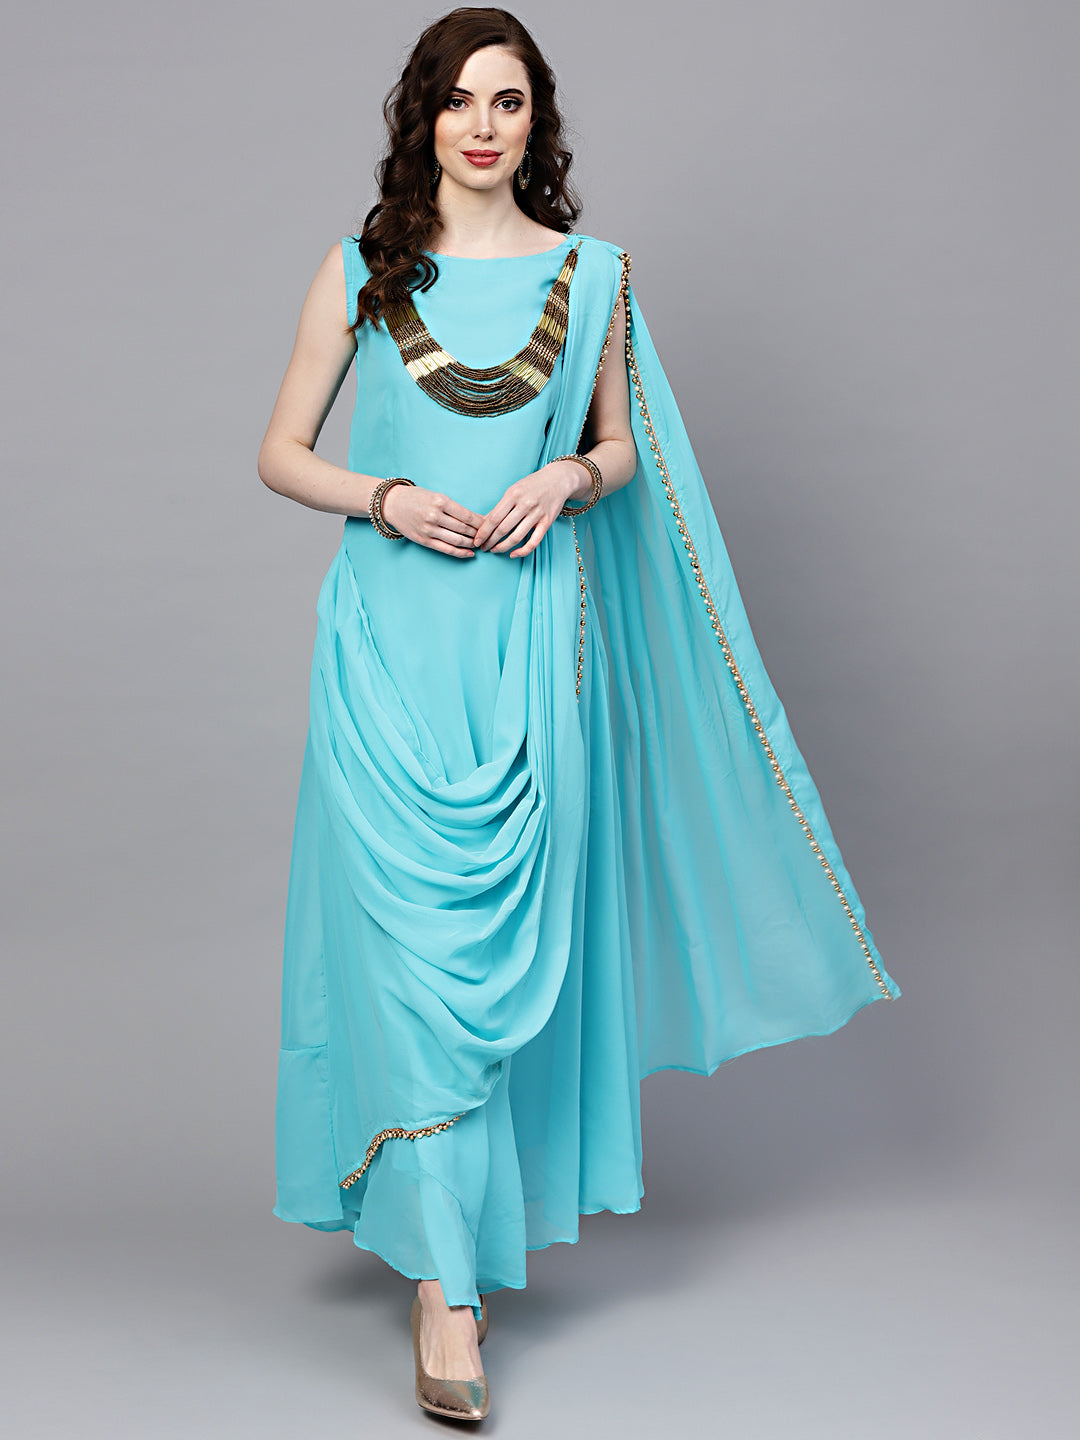 Embellished Sheath Dress With Attached Dupatta - Pinkshop